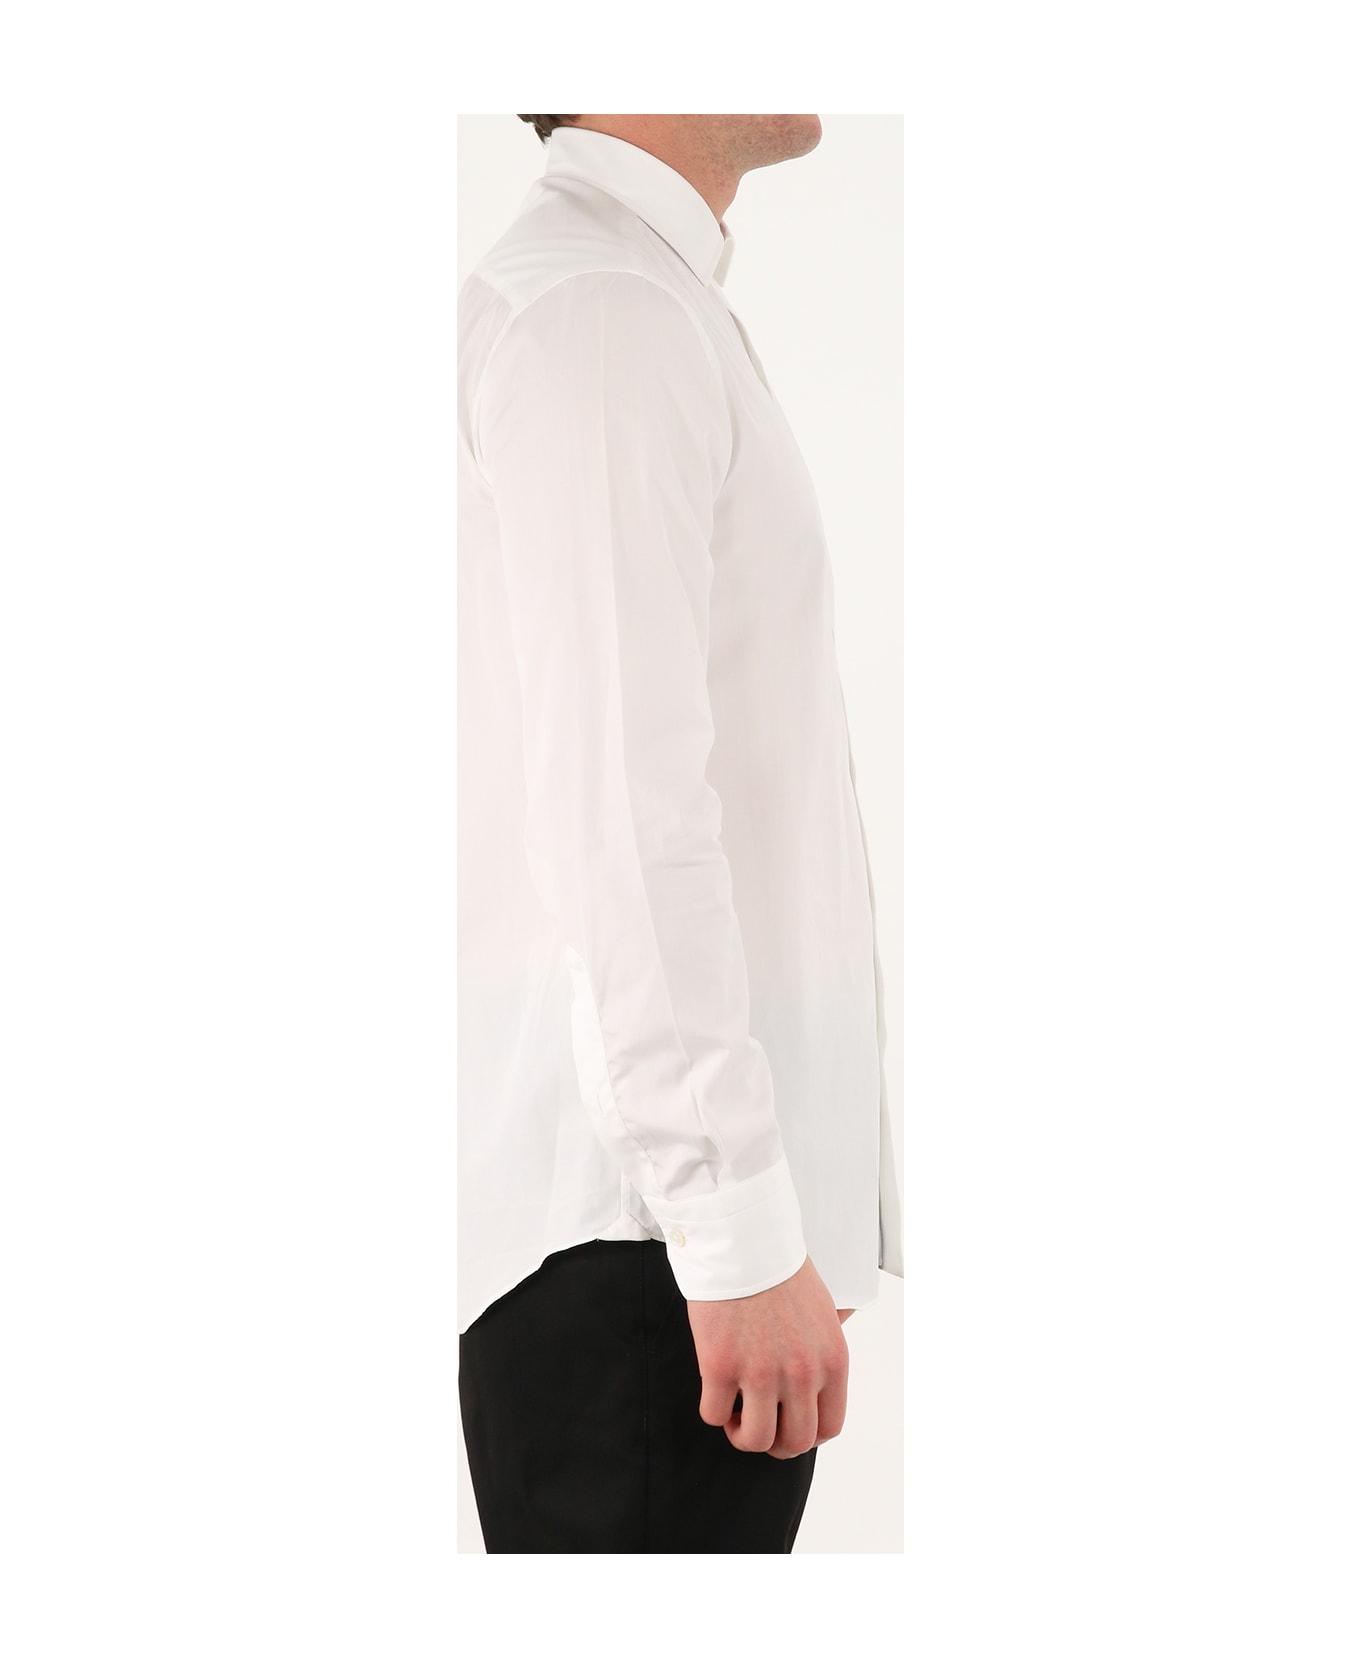 Salvatore Piccolo Pin Argento White Shirt - WHITE